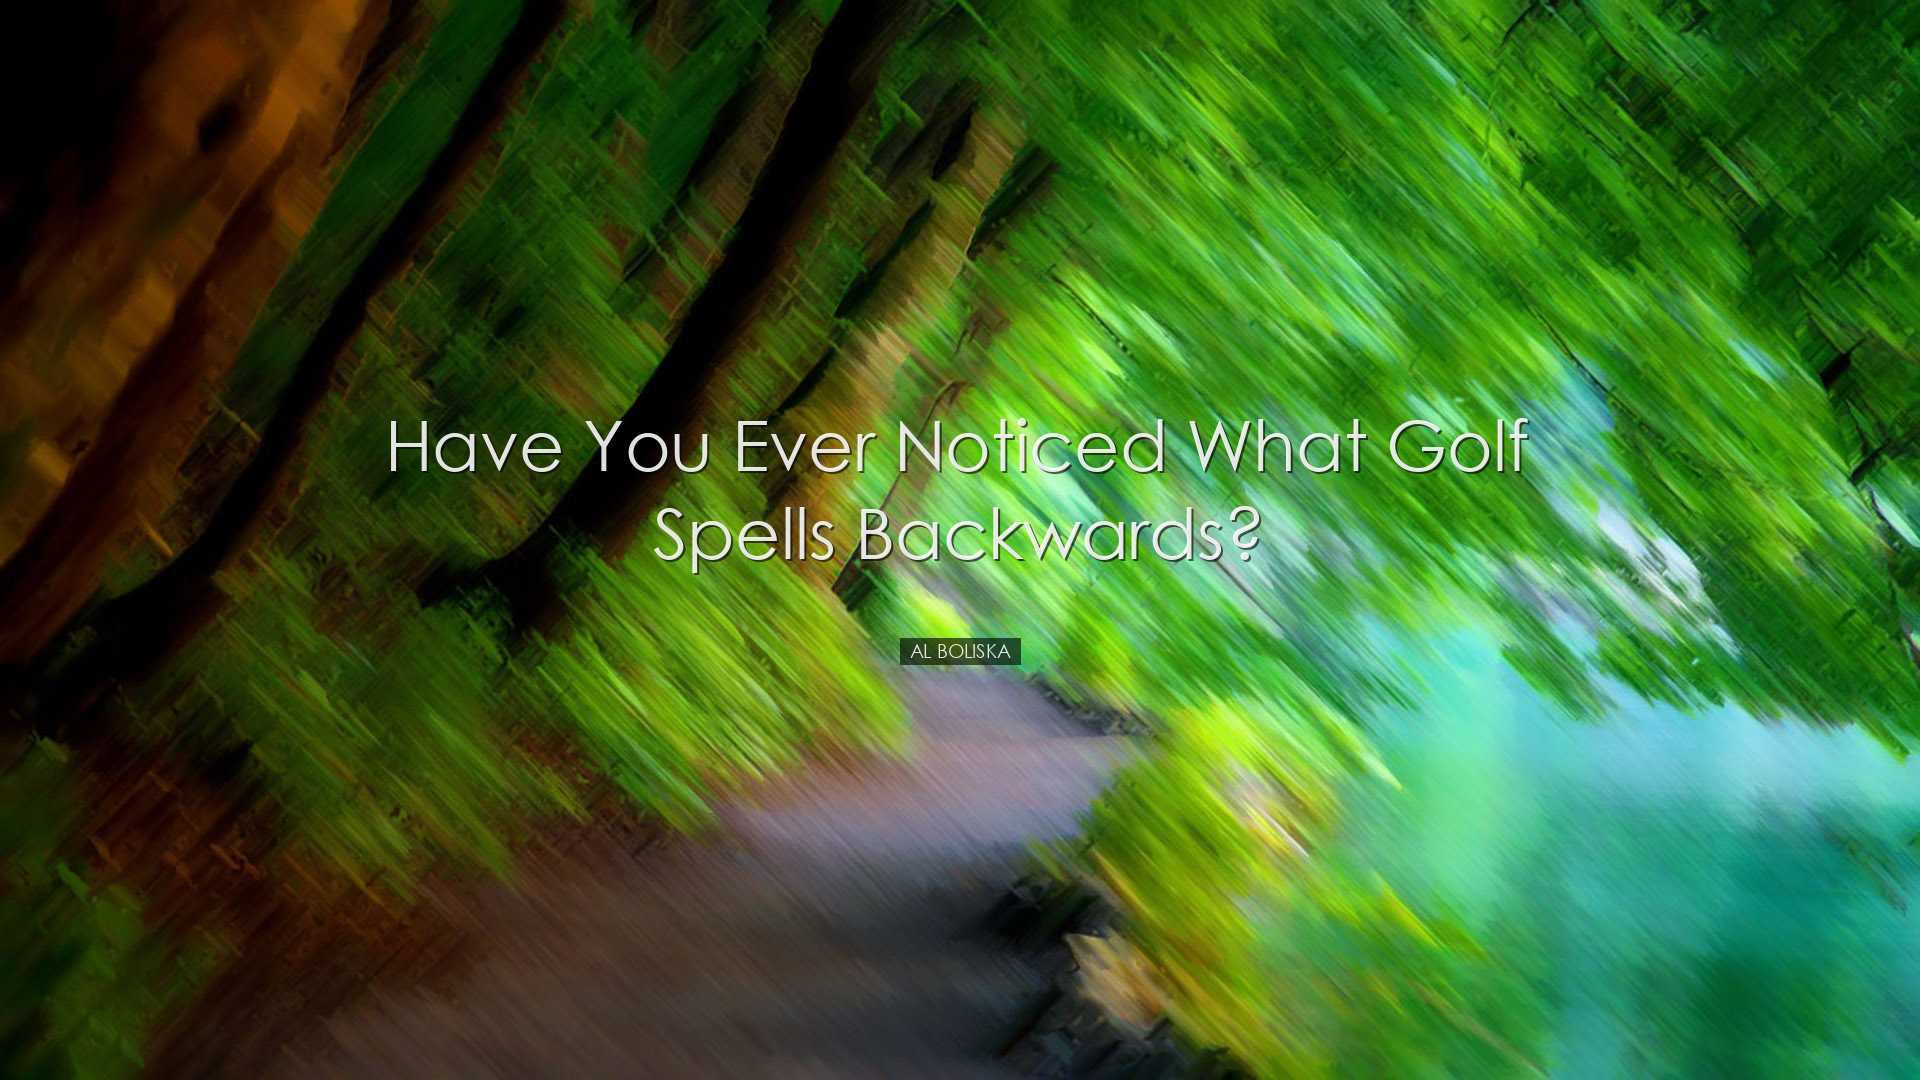 Have you ever noticed what golf spells backwards? - Al Boliska